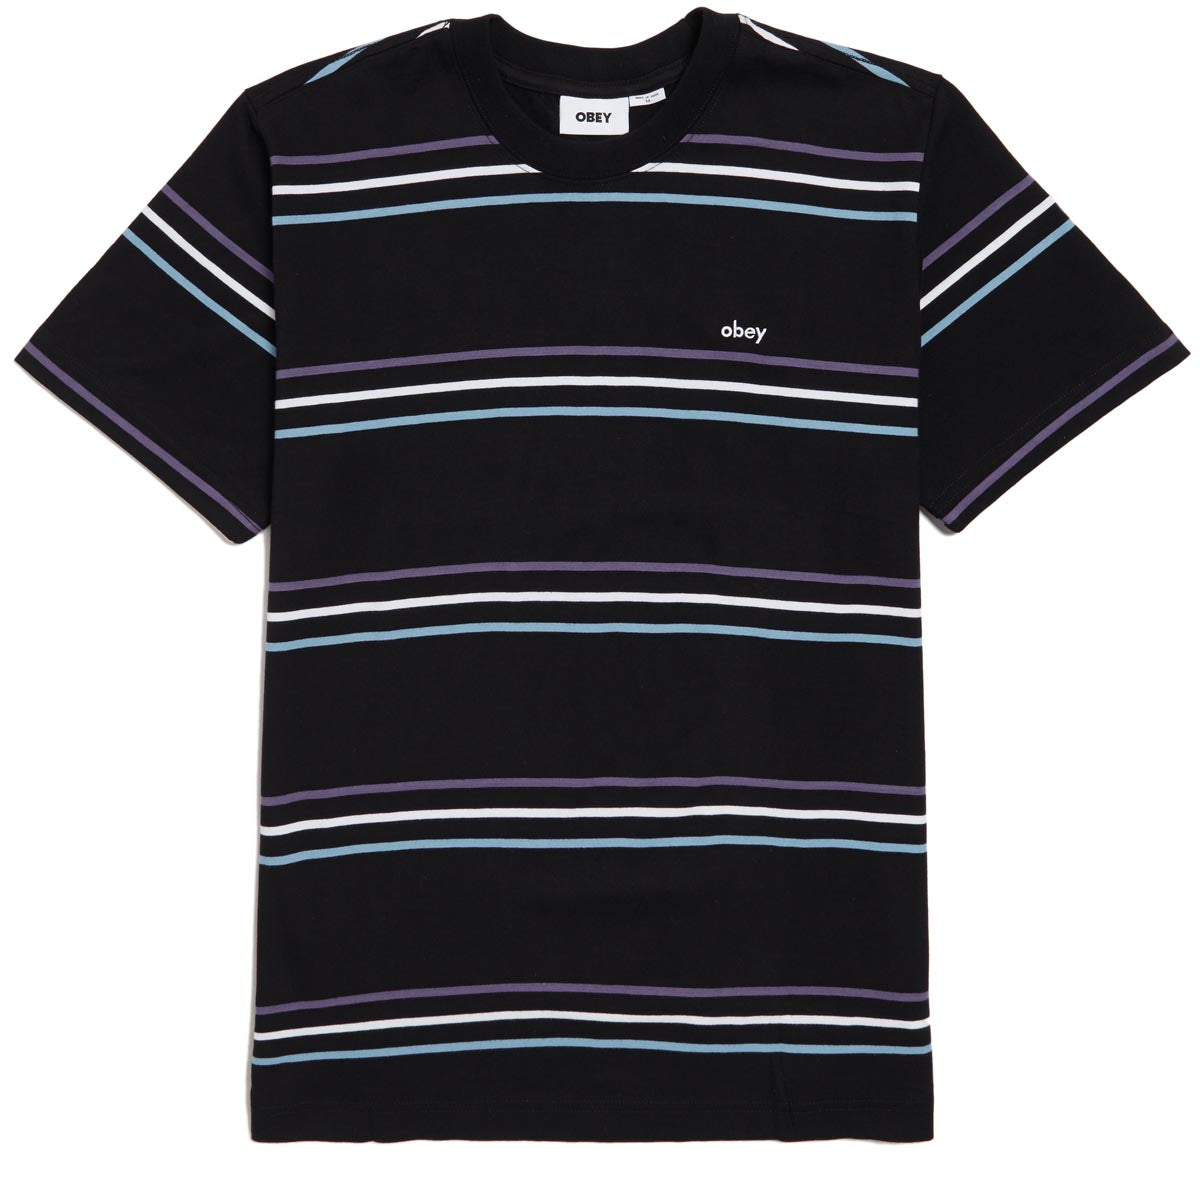 Obey Montrose Stripe T-Shirt - Black/Multi image 1